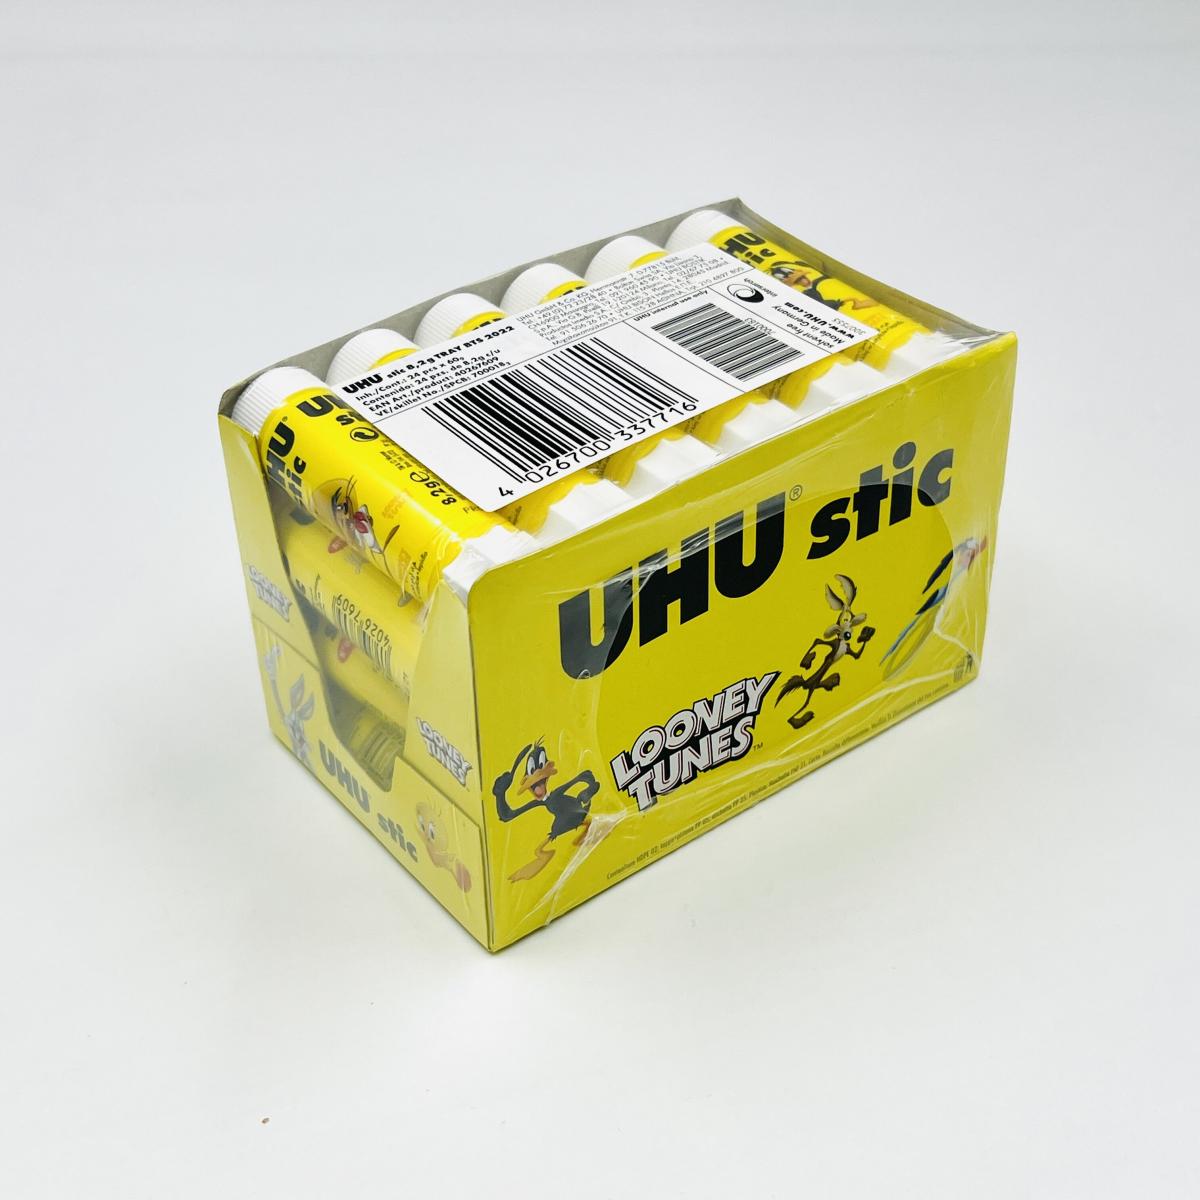 2 x Uhu Glue Stick 8.2g - All Purpose Glue - Solvent Free - Non-Toxic